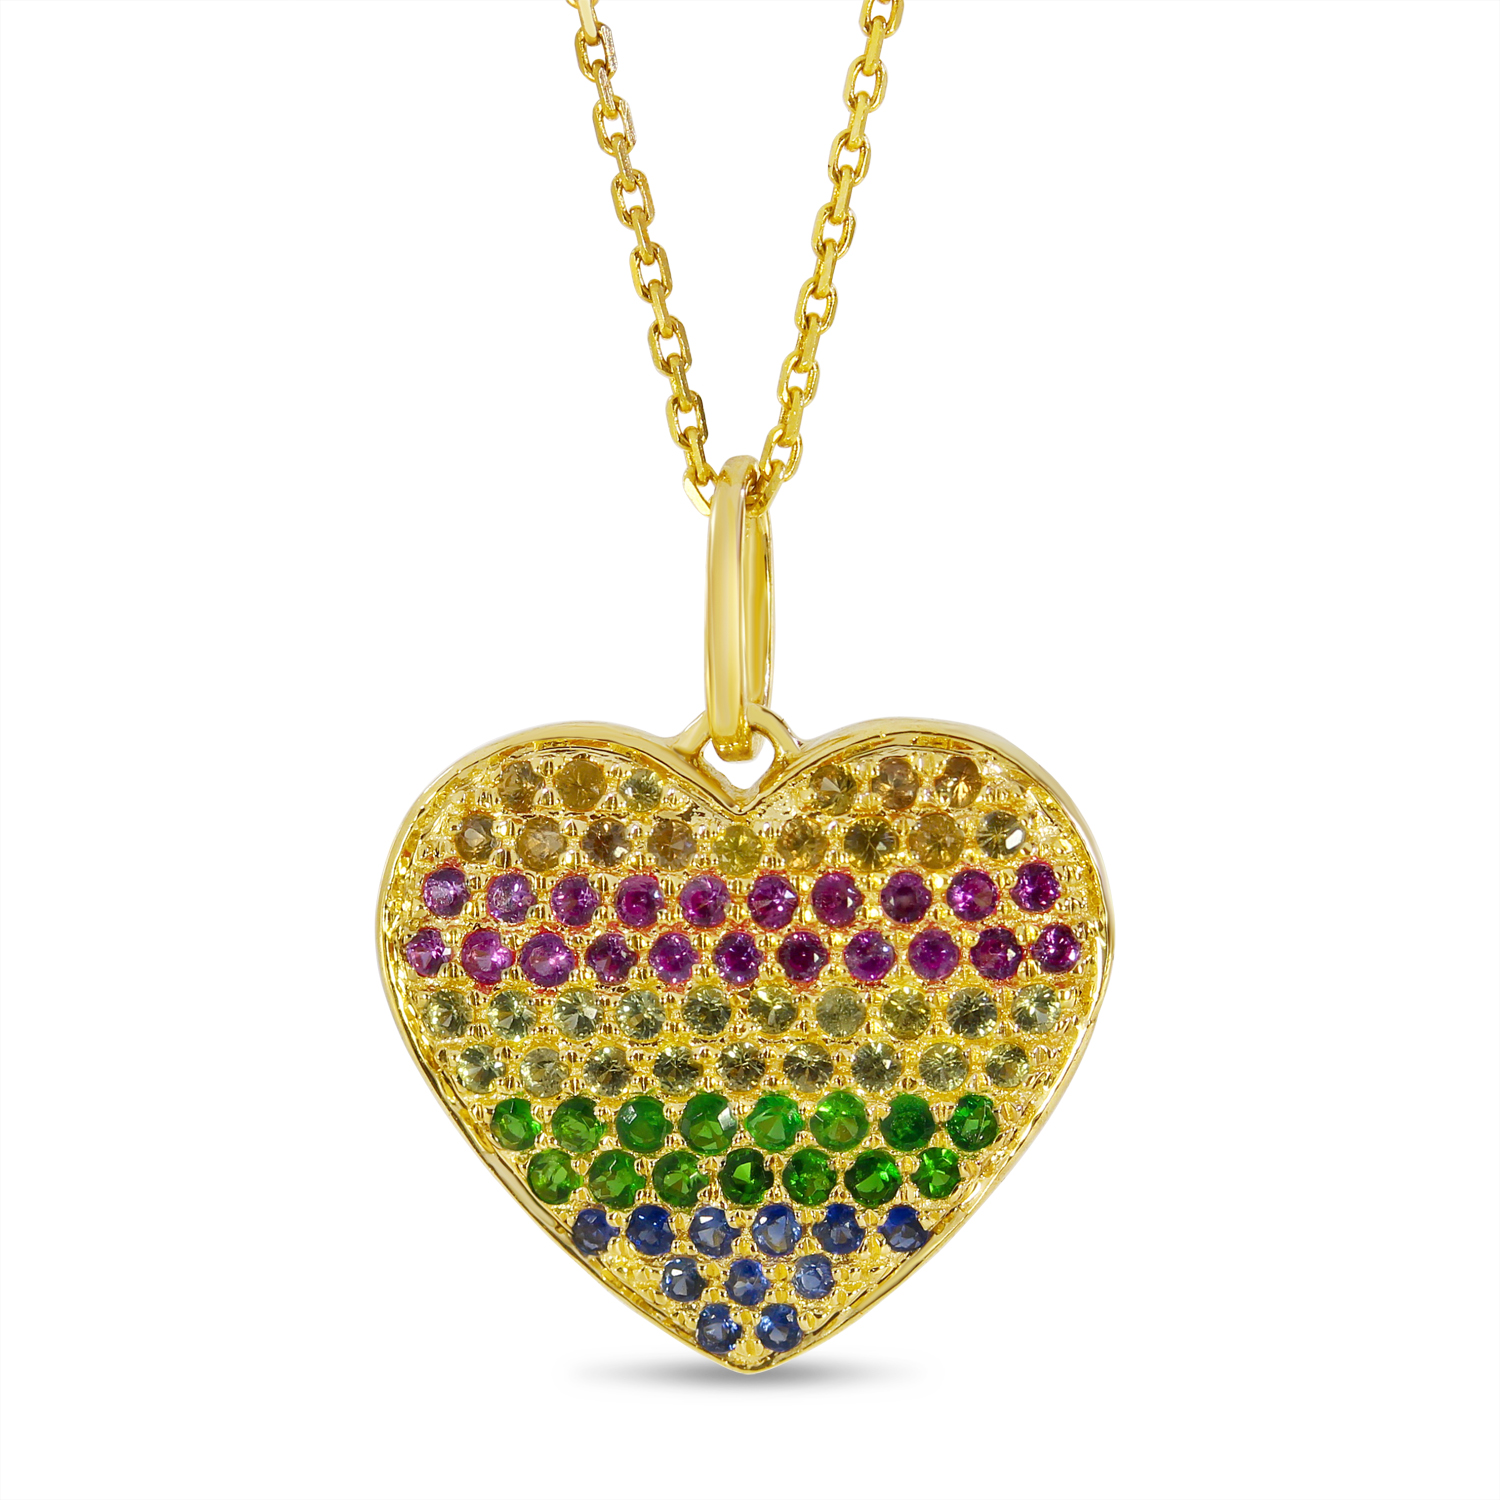 14K Yellow Gold Rainbow Sapphire Heart Pendant